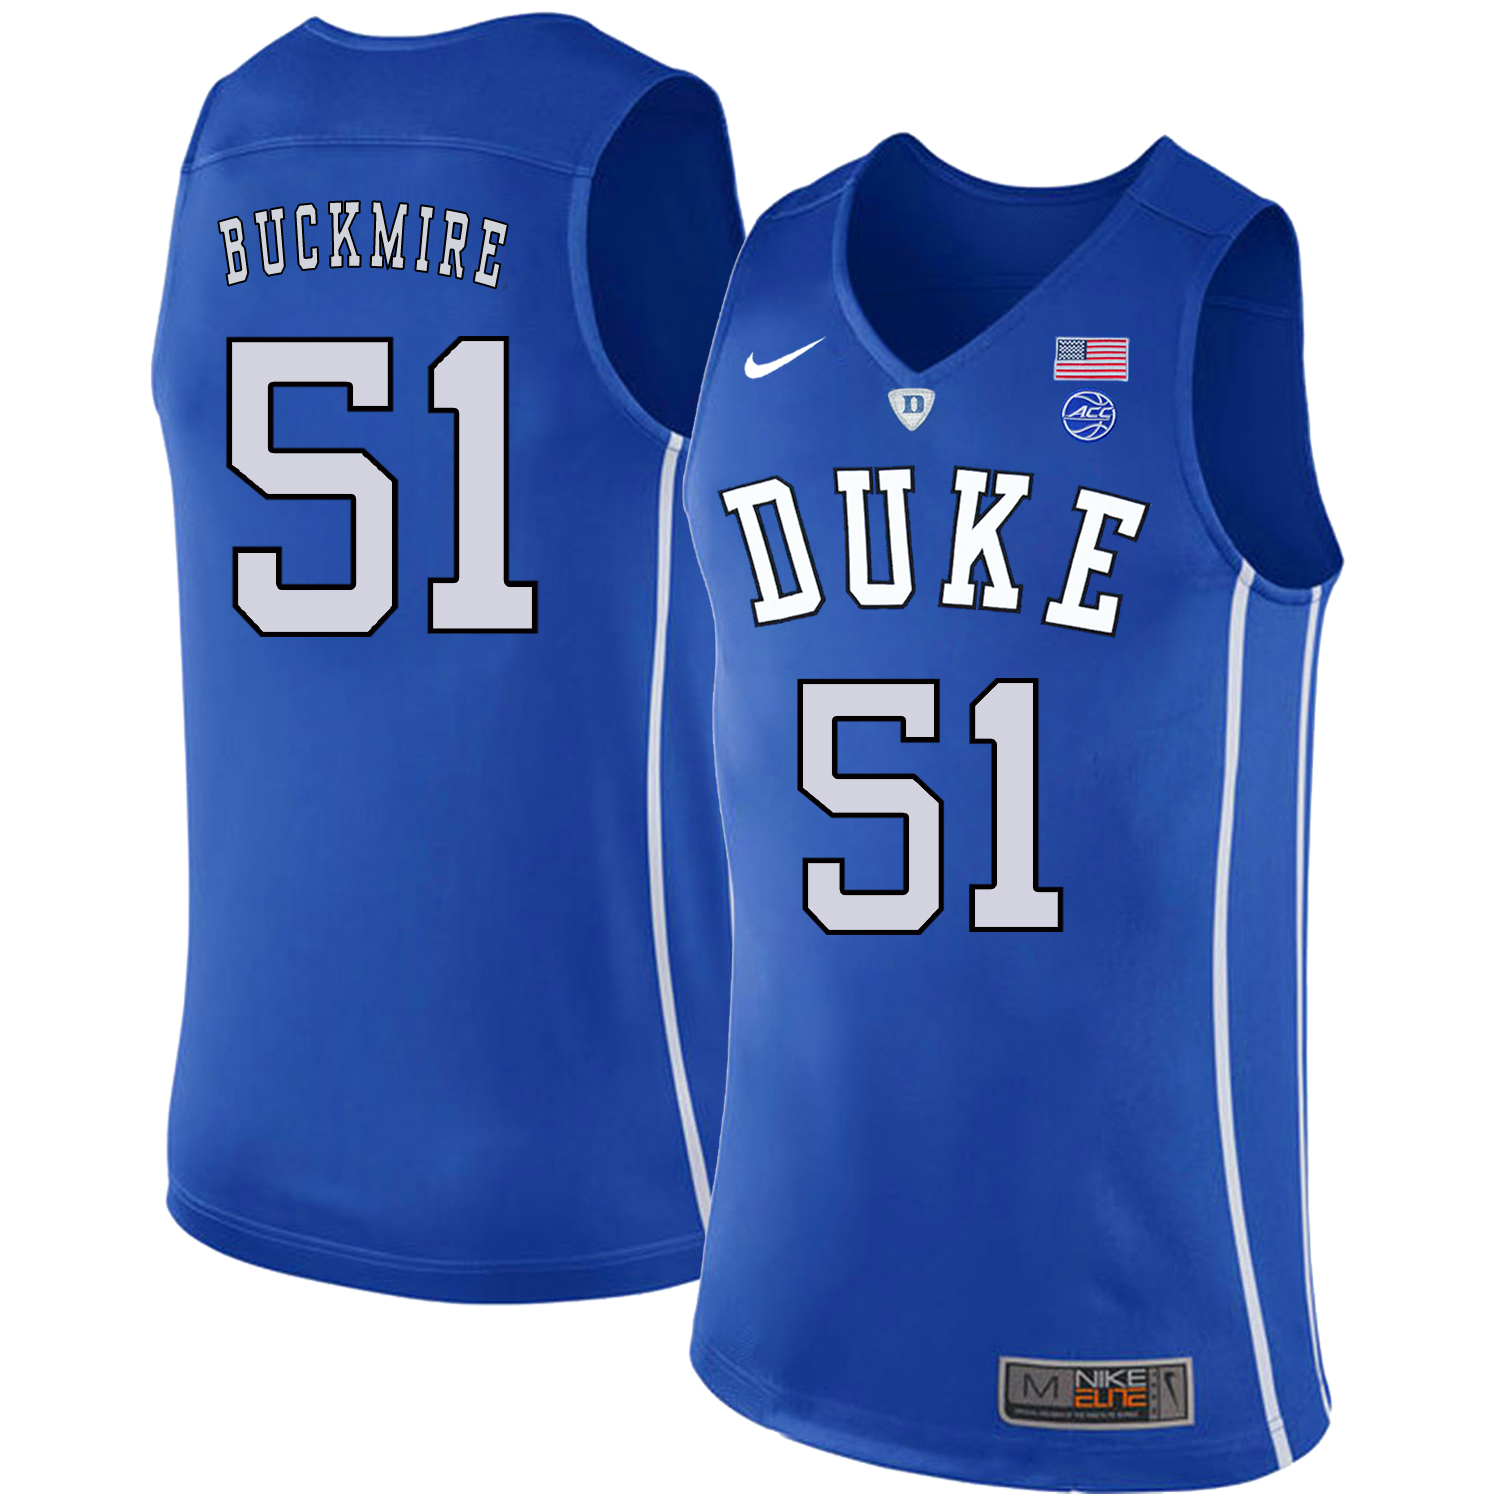 Duke Blue Devils 51 Mike Buckmire Blue Nike College Basketball Jersey